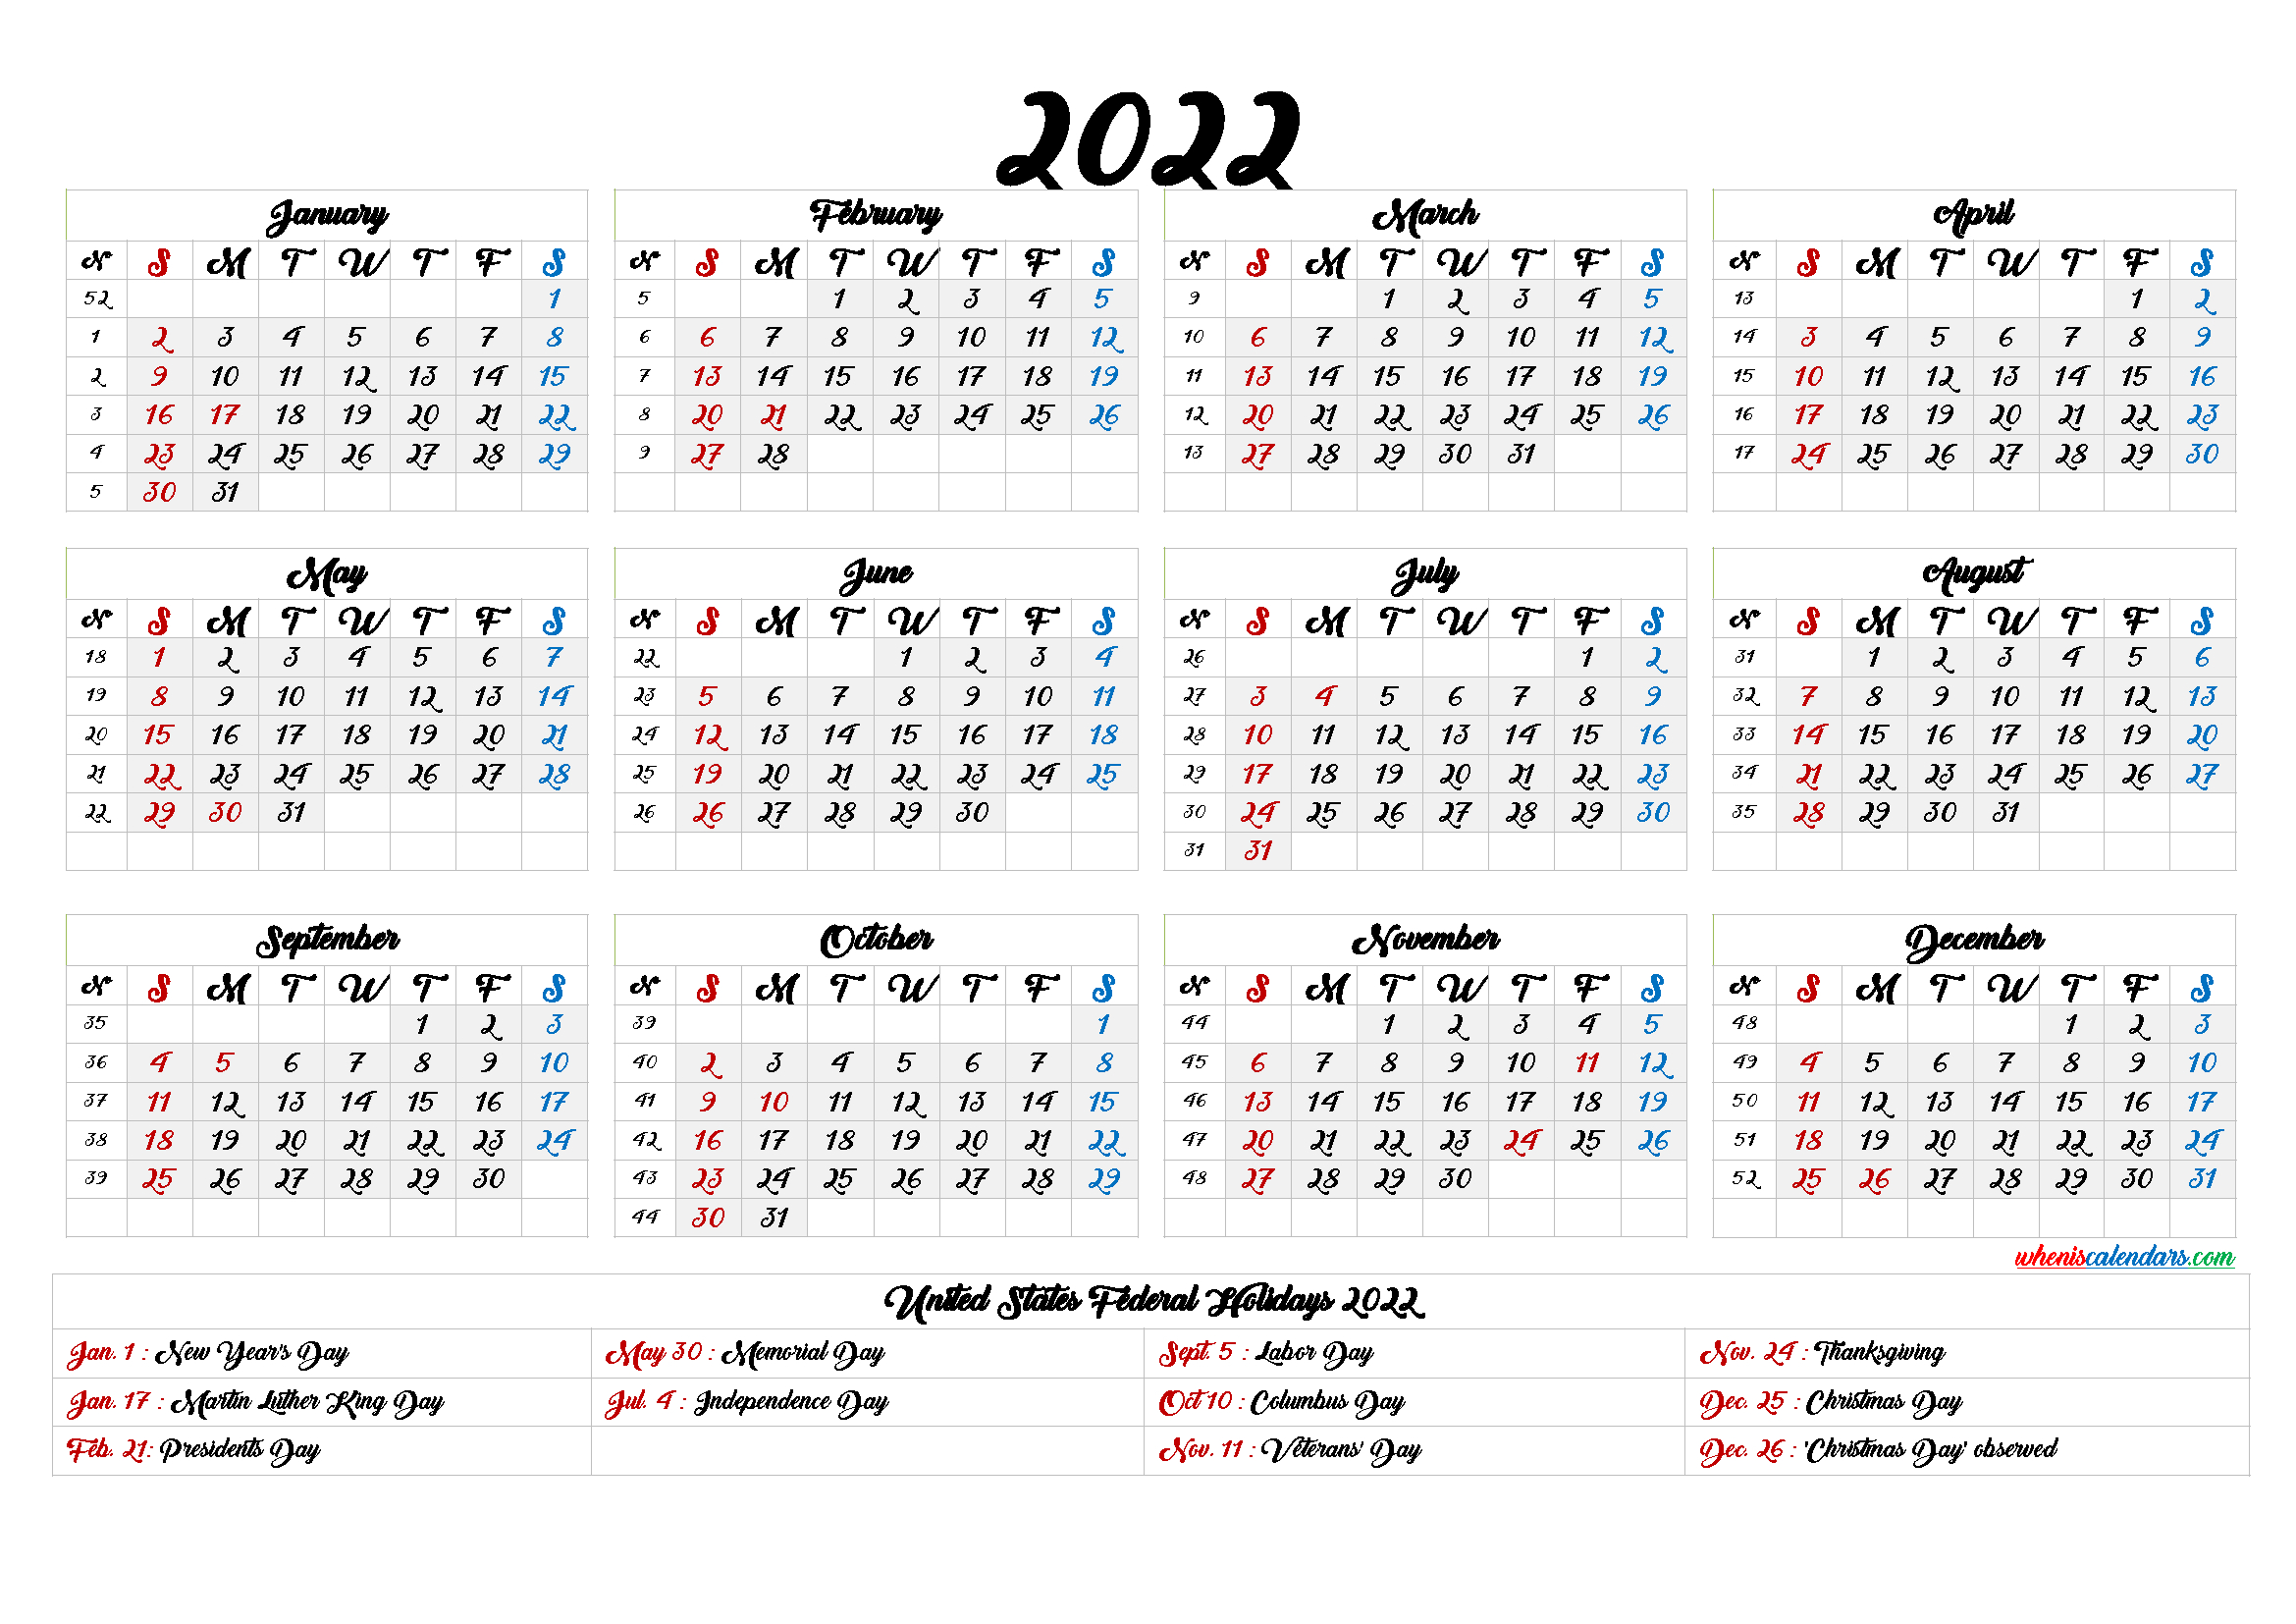 lego hooters april calendar Nalc 2022 Calendar with us holidays